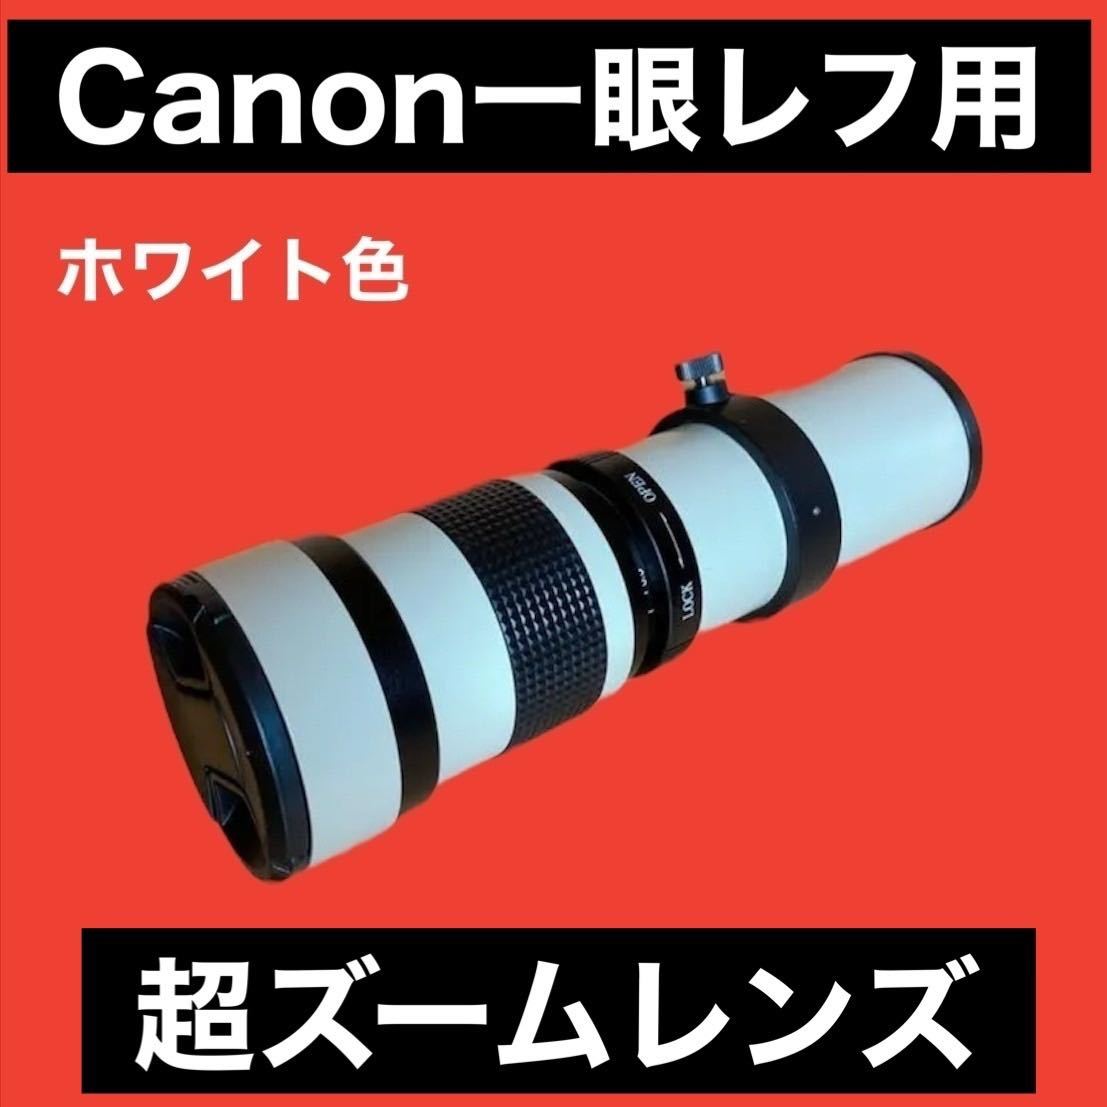 Canon一眼レフ用 超望遠レンズ 1600mmまでズーム 驚異の長距離レンズ 